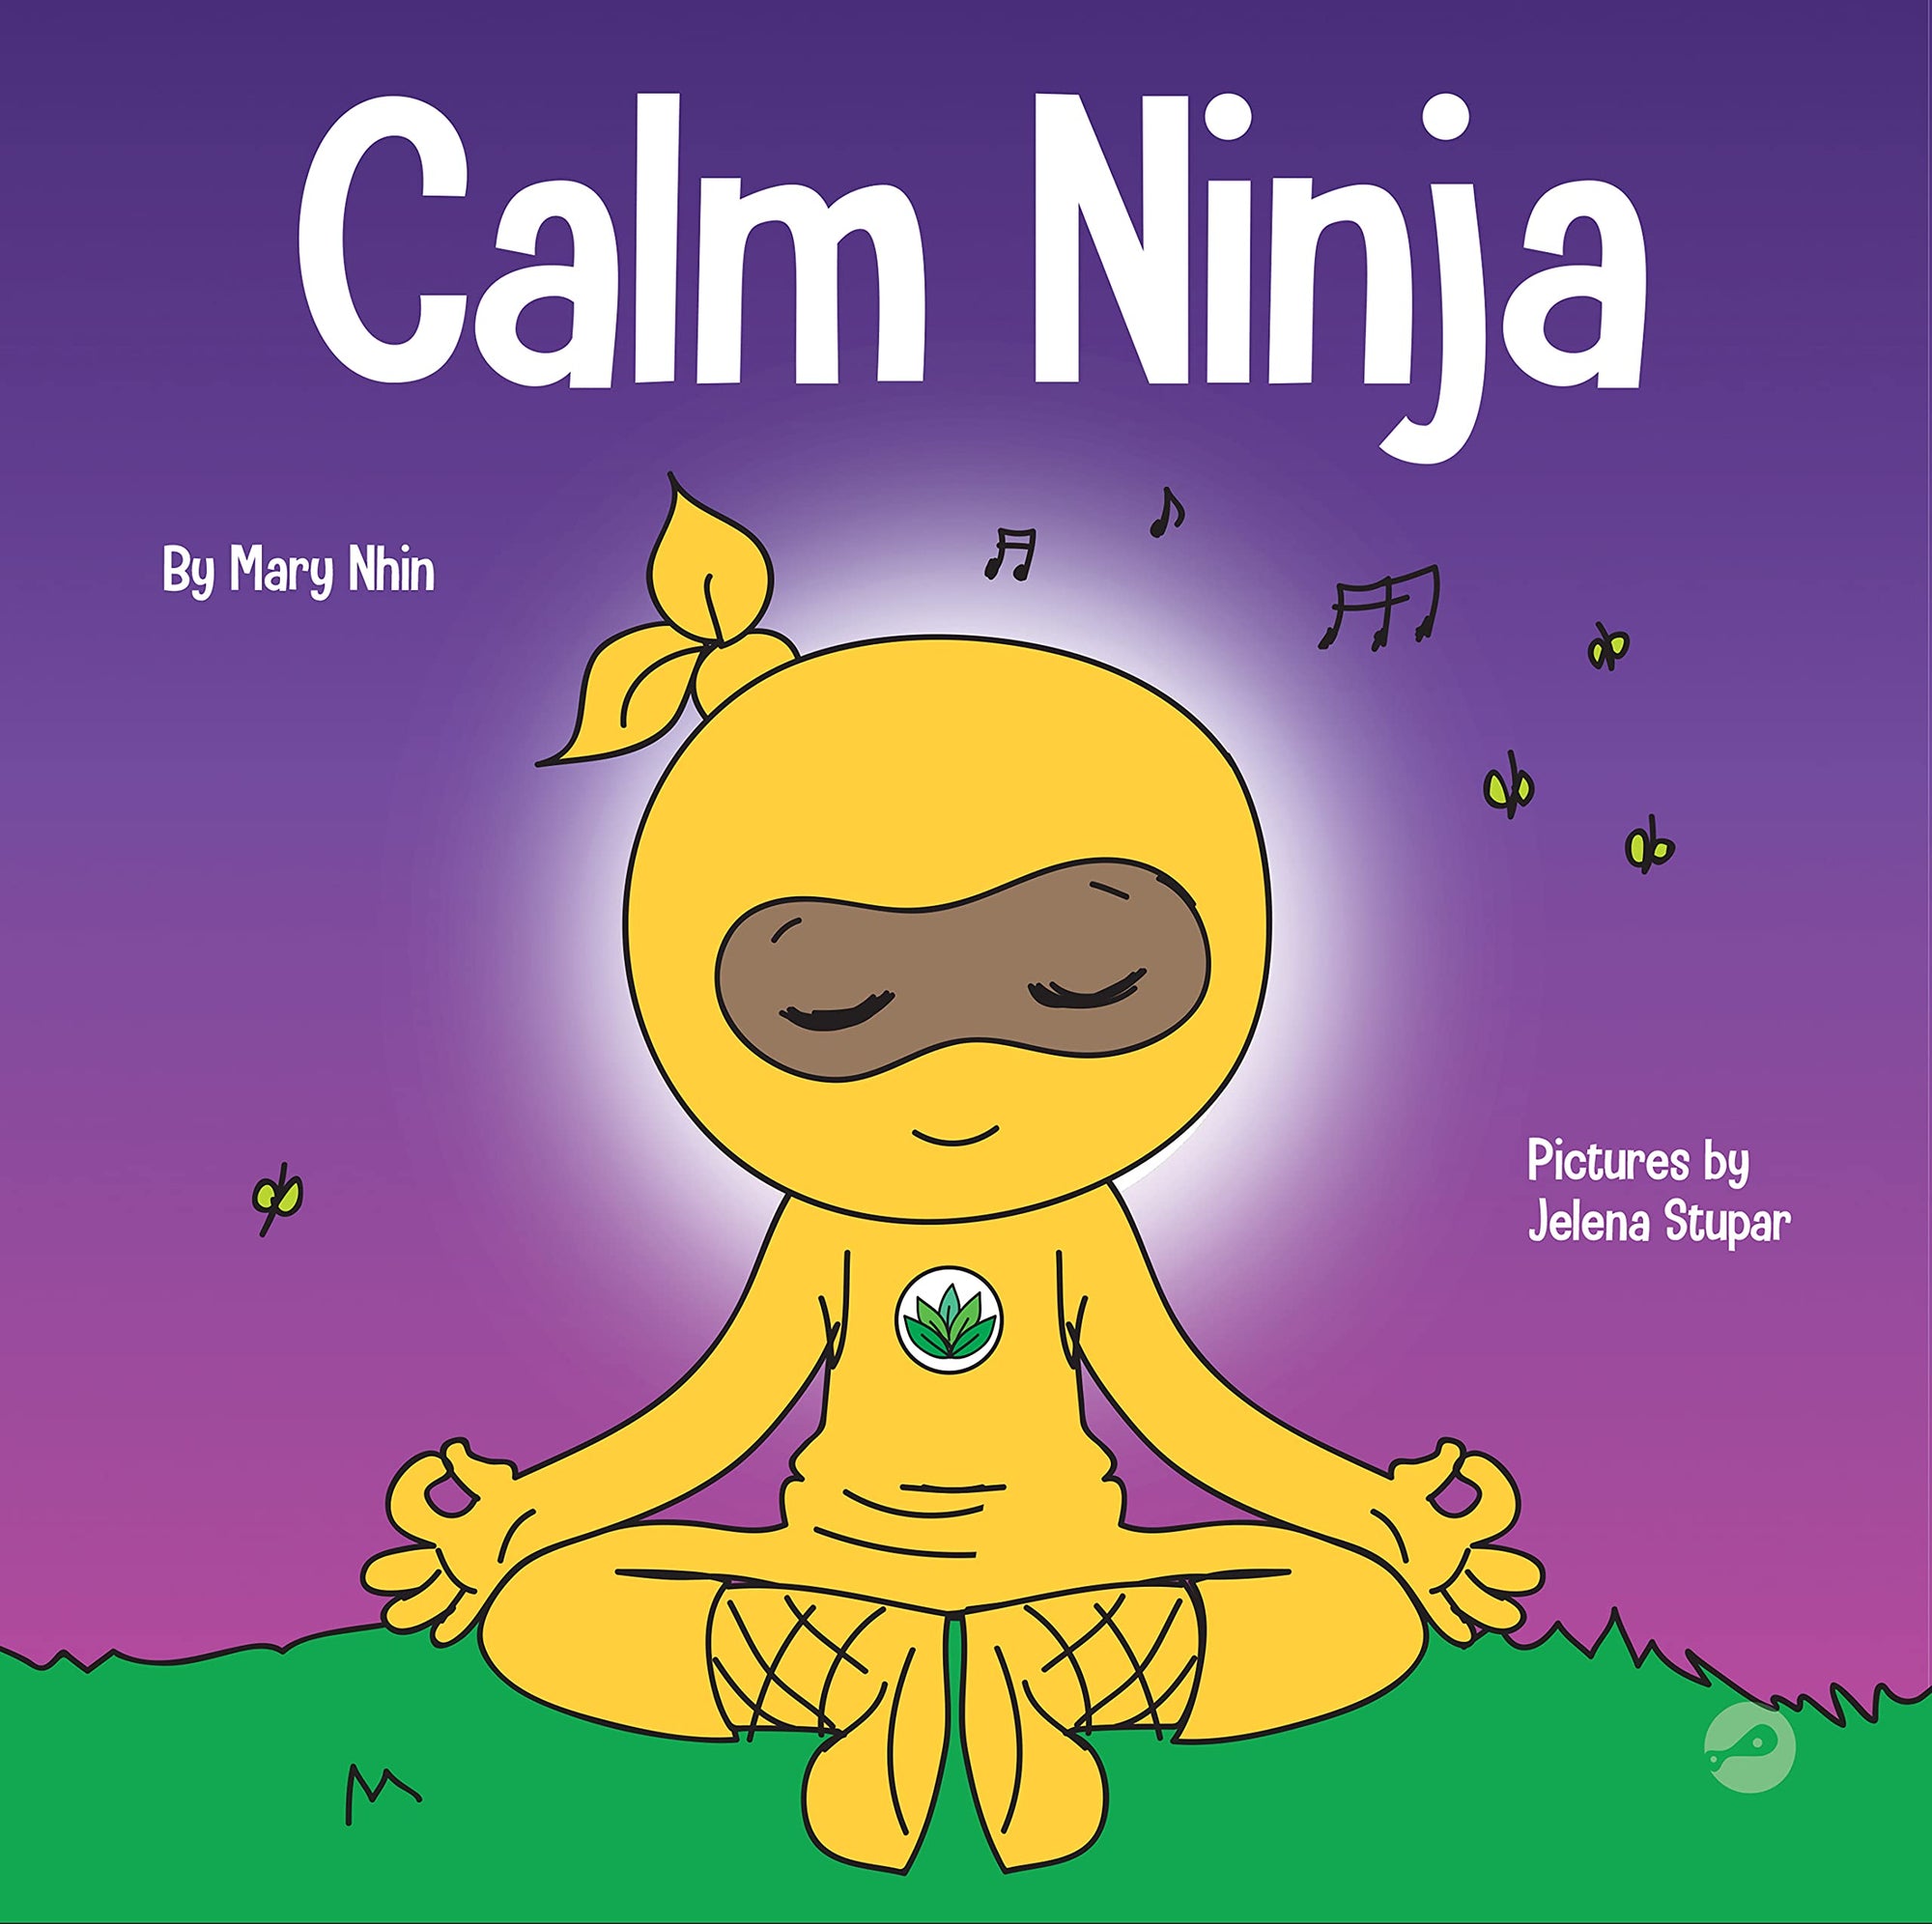 Calm ninja, Mary Nhin